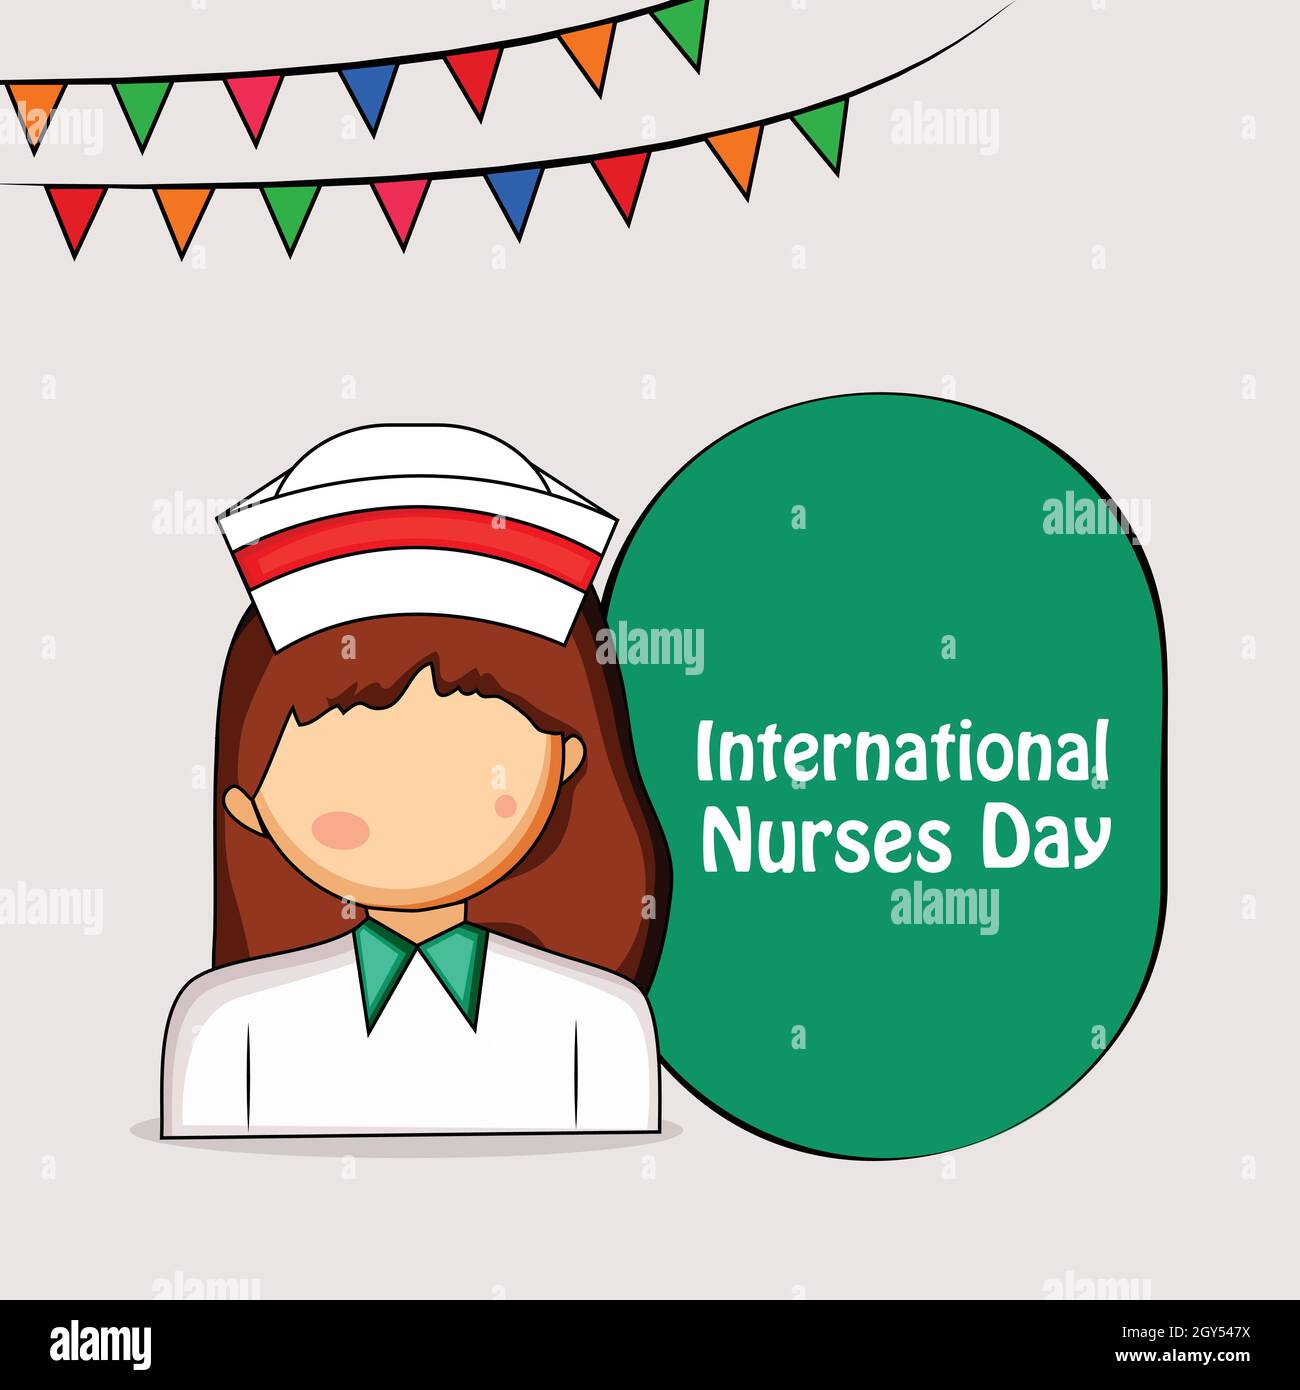 International nurses day background Stock Vector